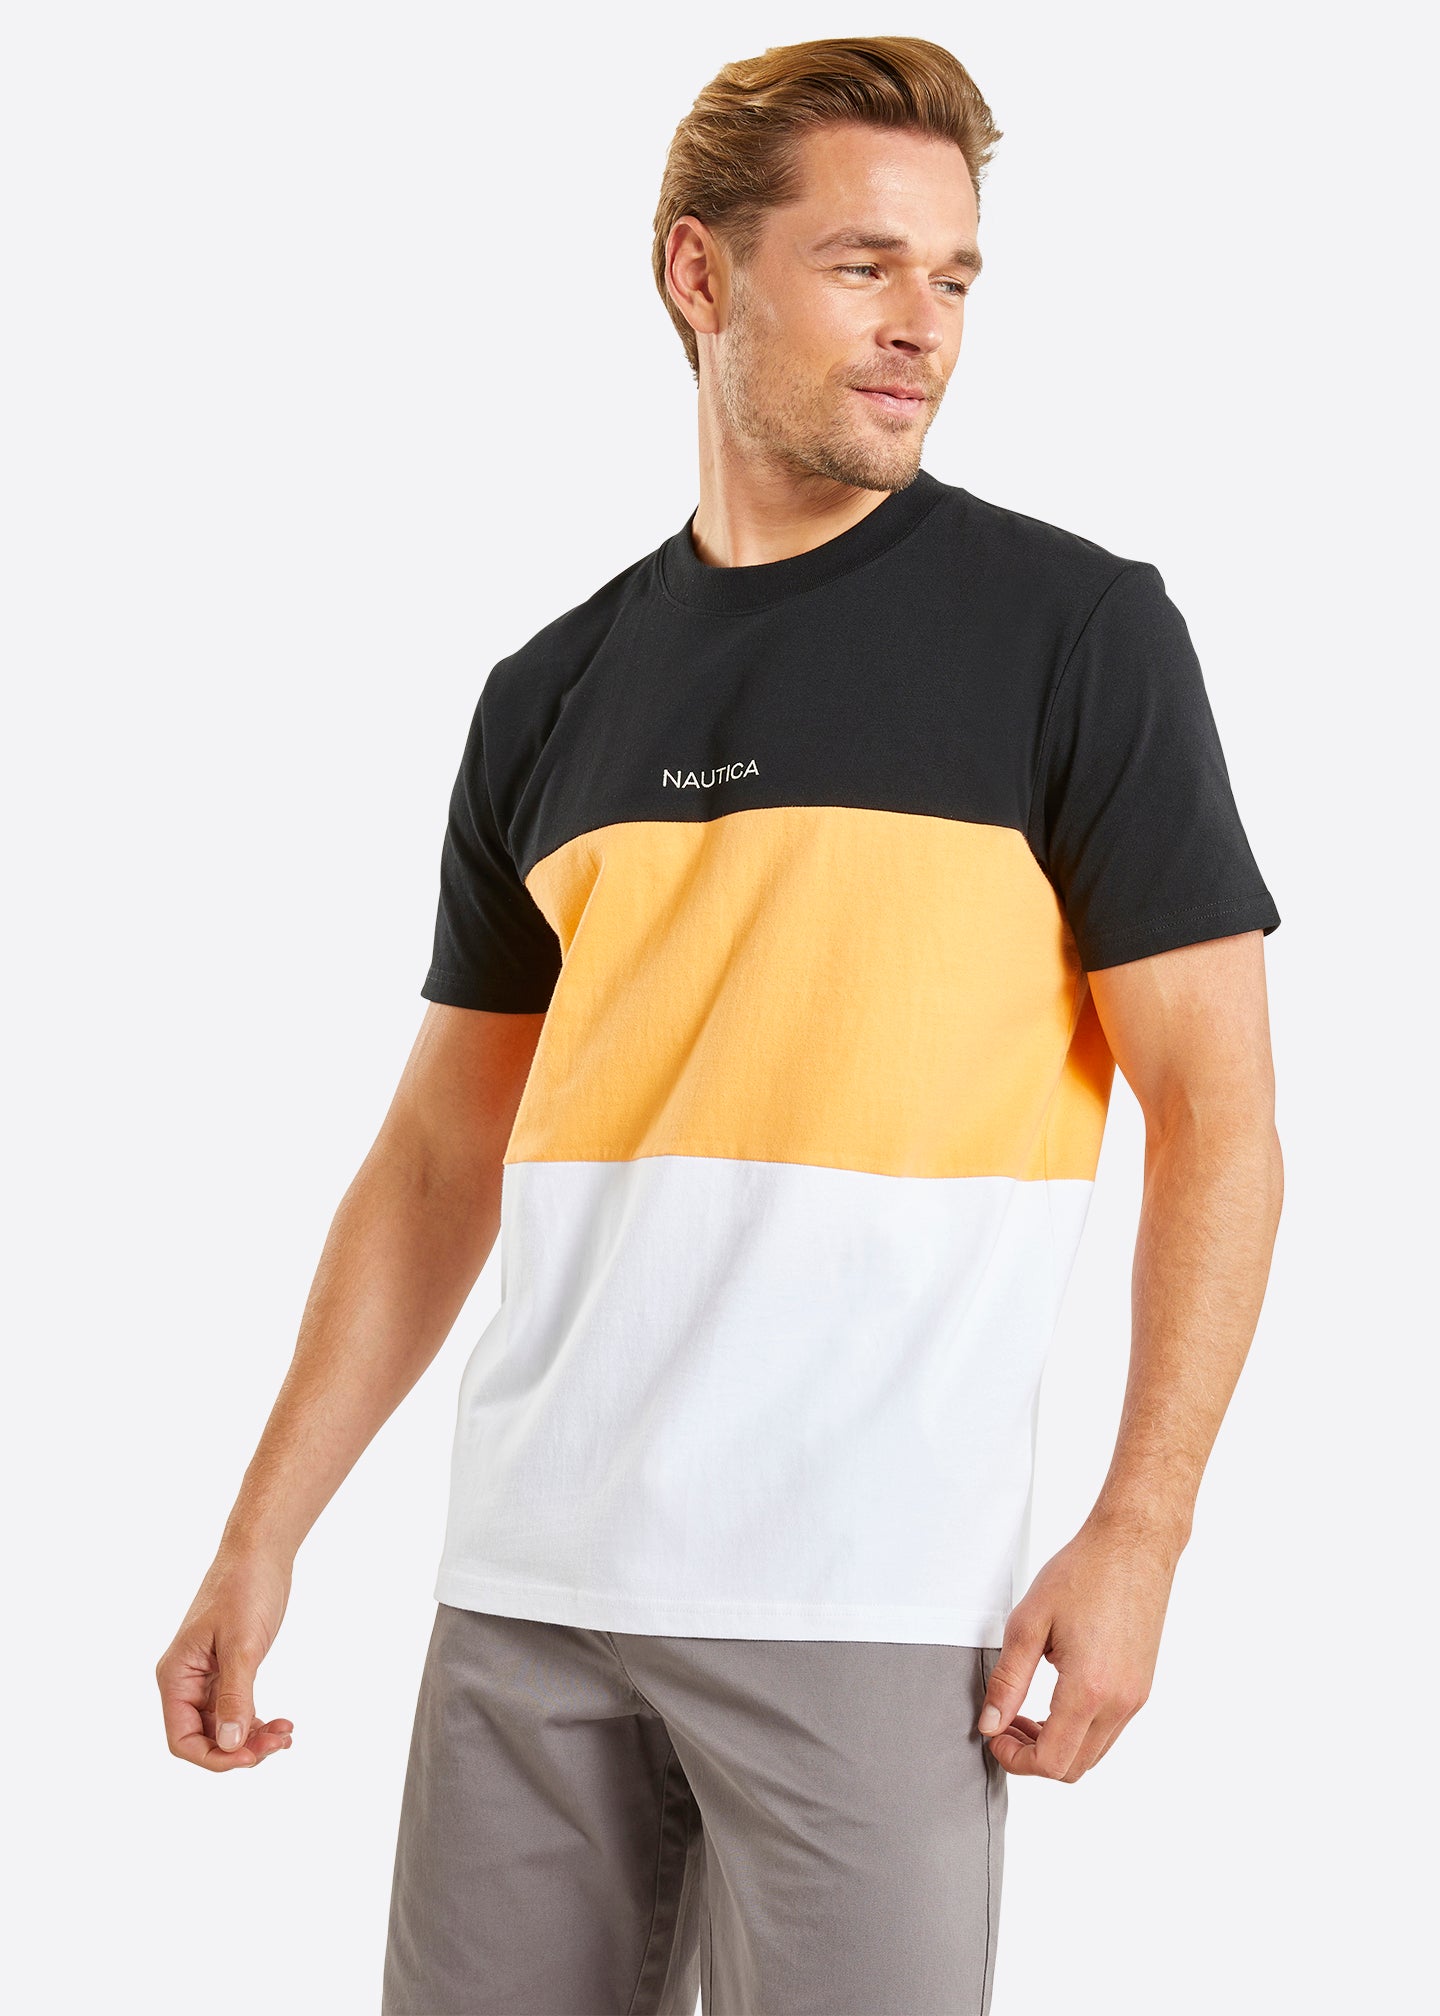 Nautica Simcoe T-Shirt - Black - Front